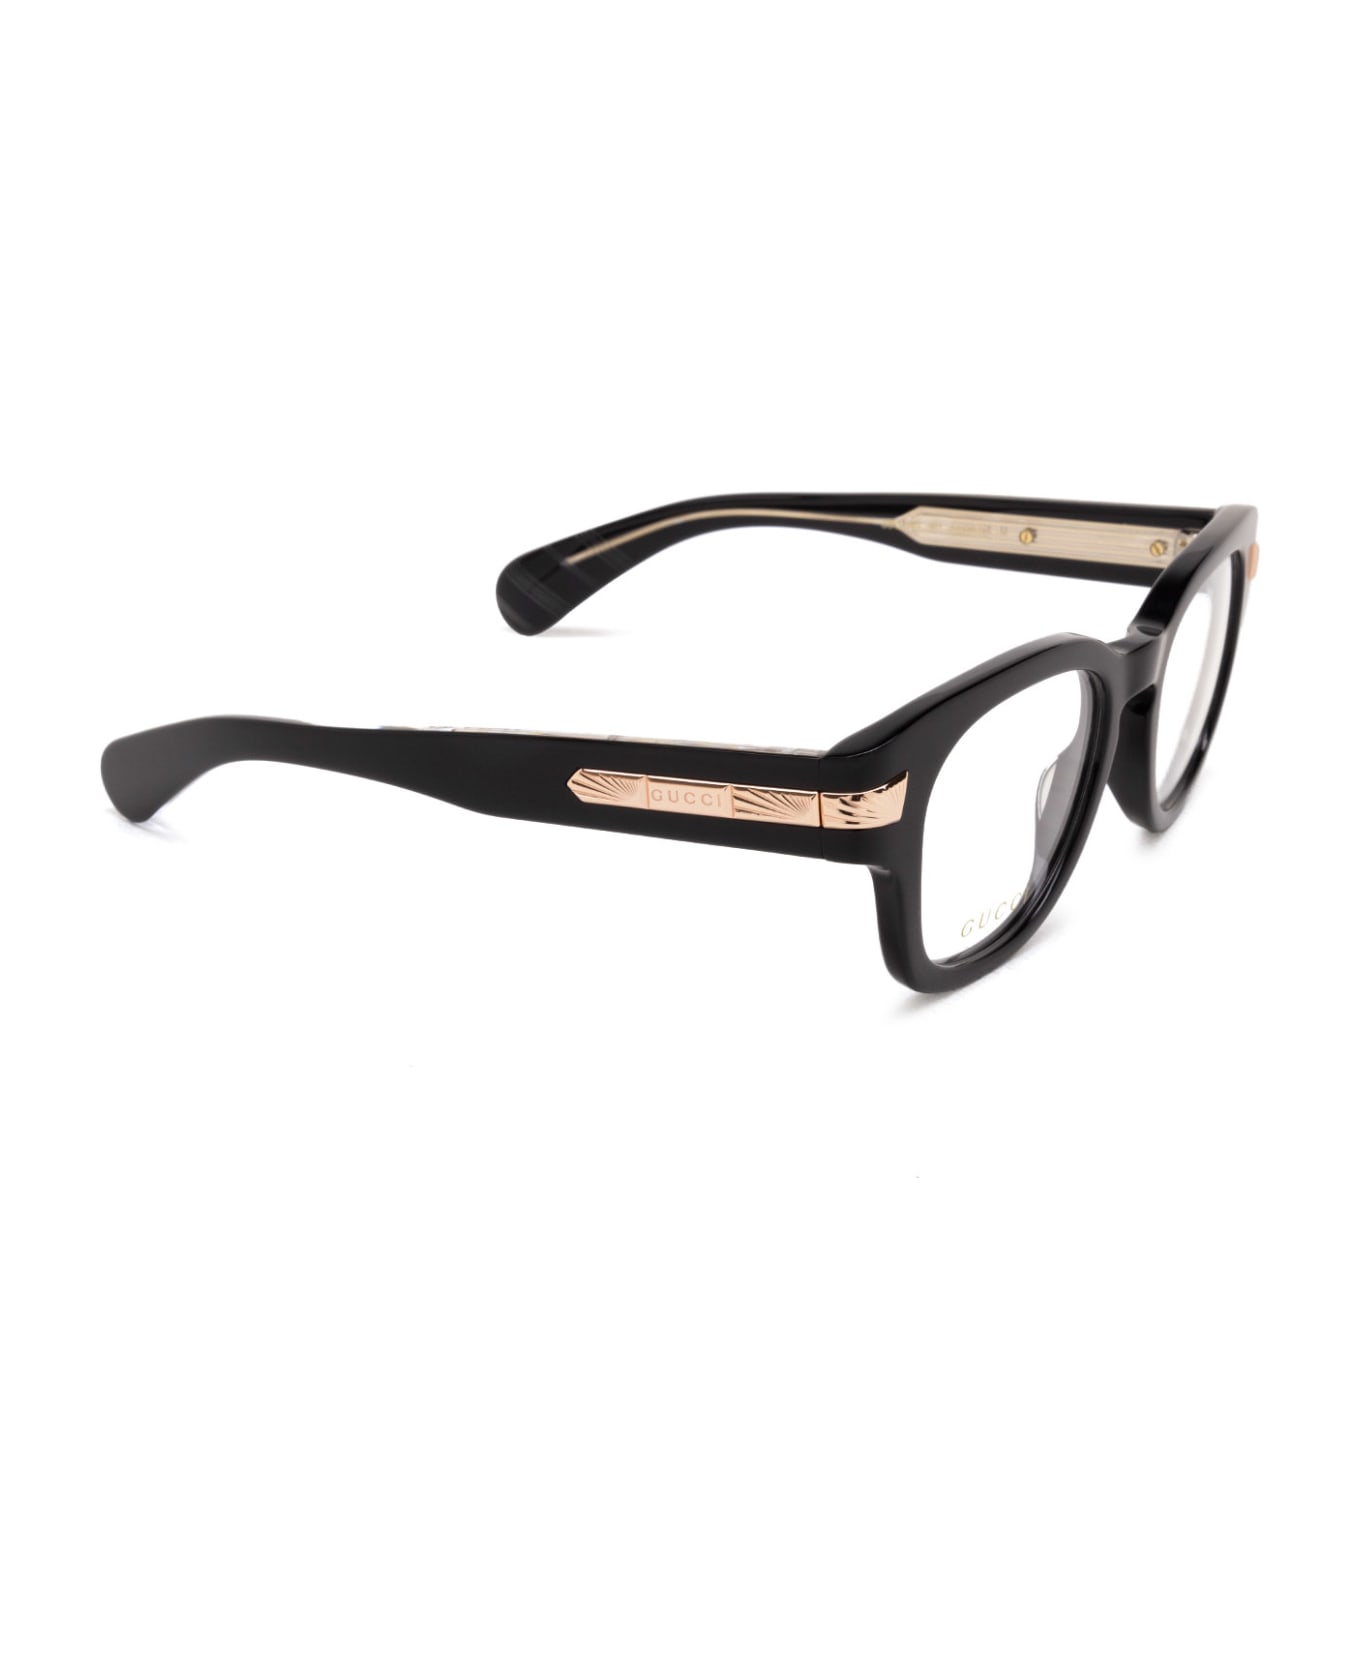 Gucci Eyewear Gg1518o Black Glasses - Black